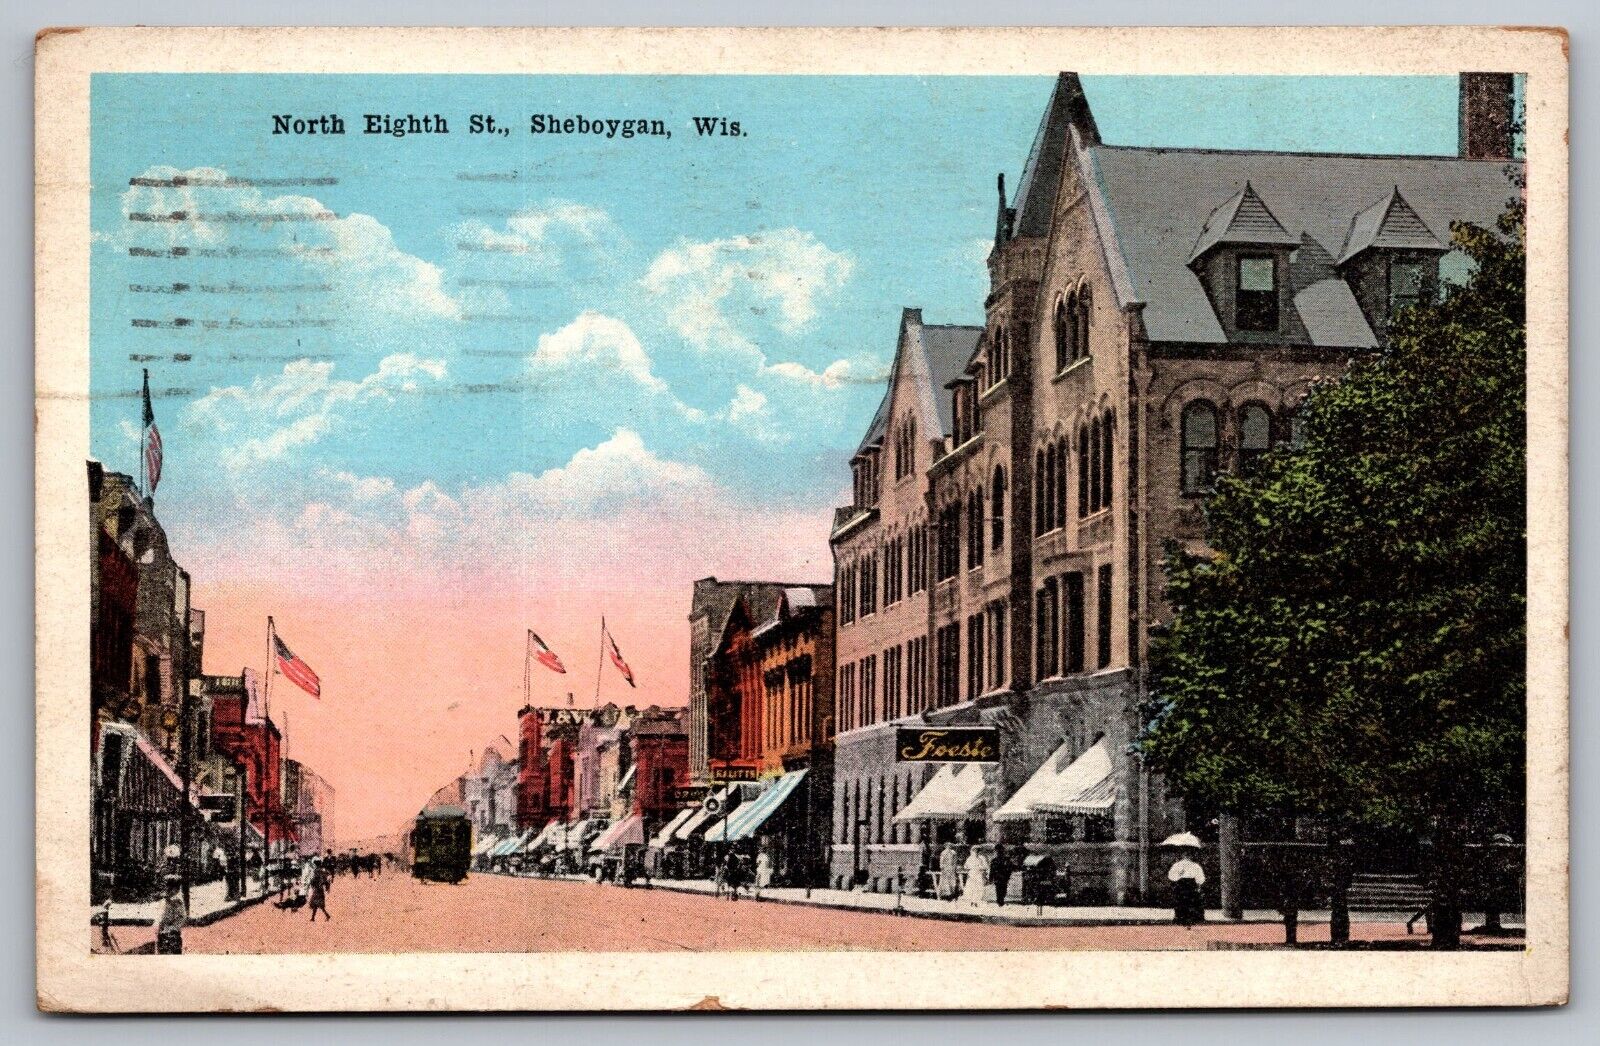 North Eighth St. Sheboygan Wisconsin Street Car-c1922 Antique Postcard